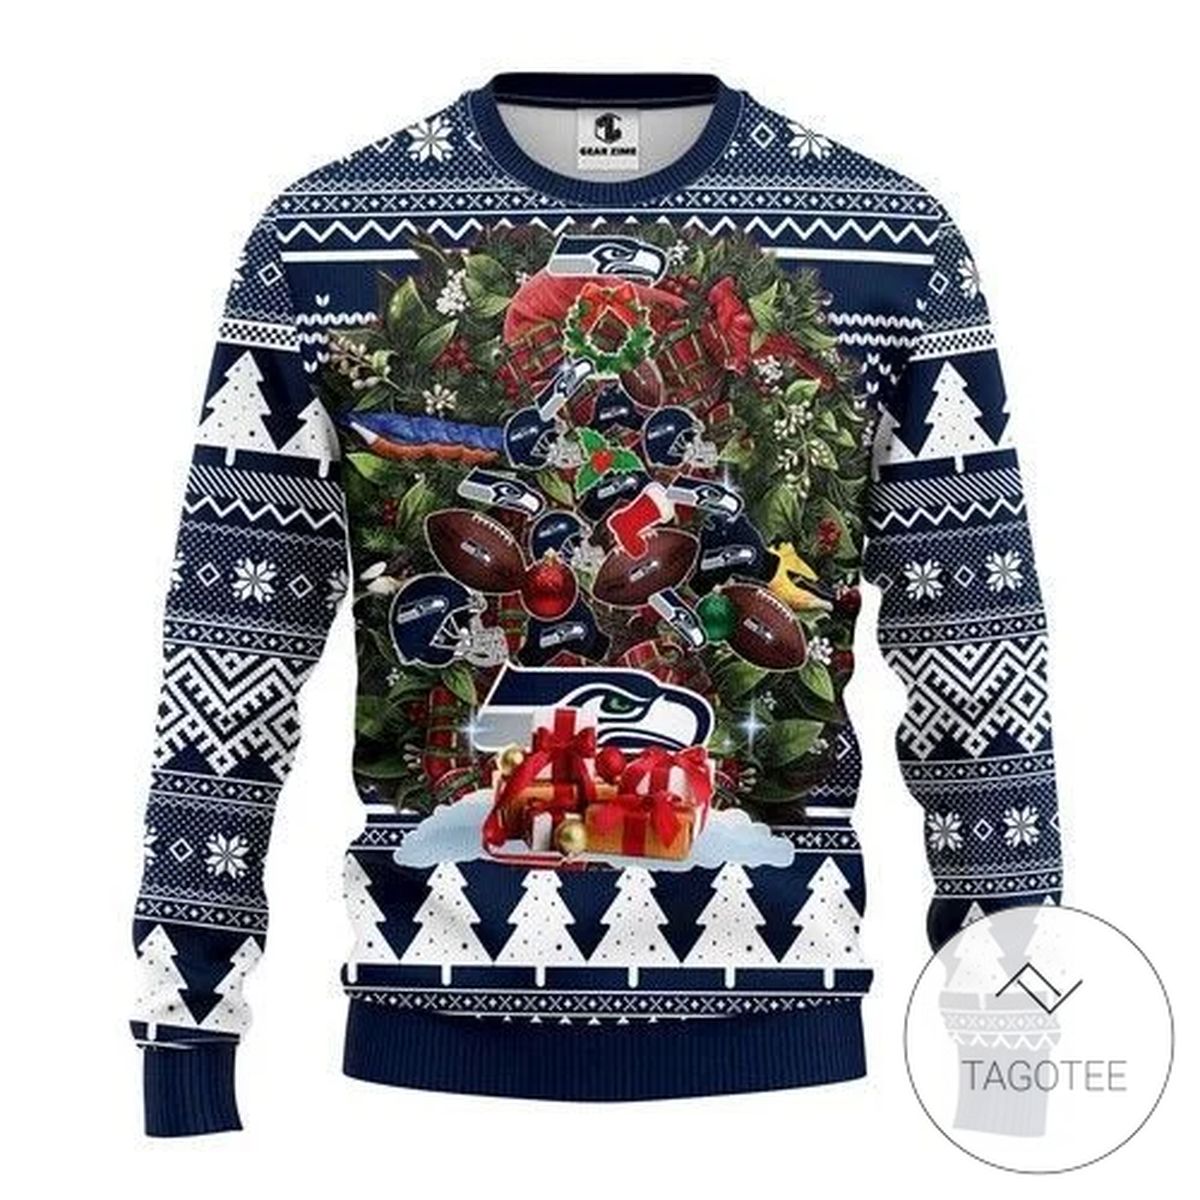 Seattle Seahawks Tree Christmas Sweatshirt Knitted Ugly Christmas Sweater